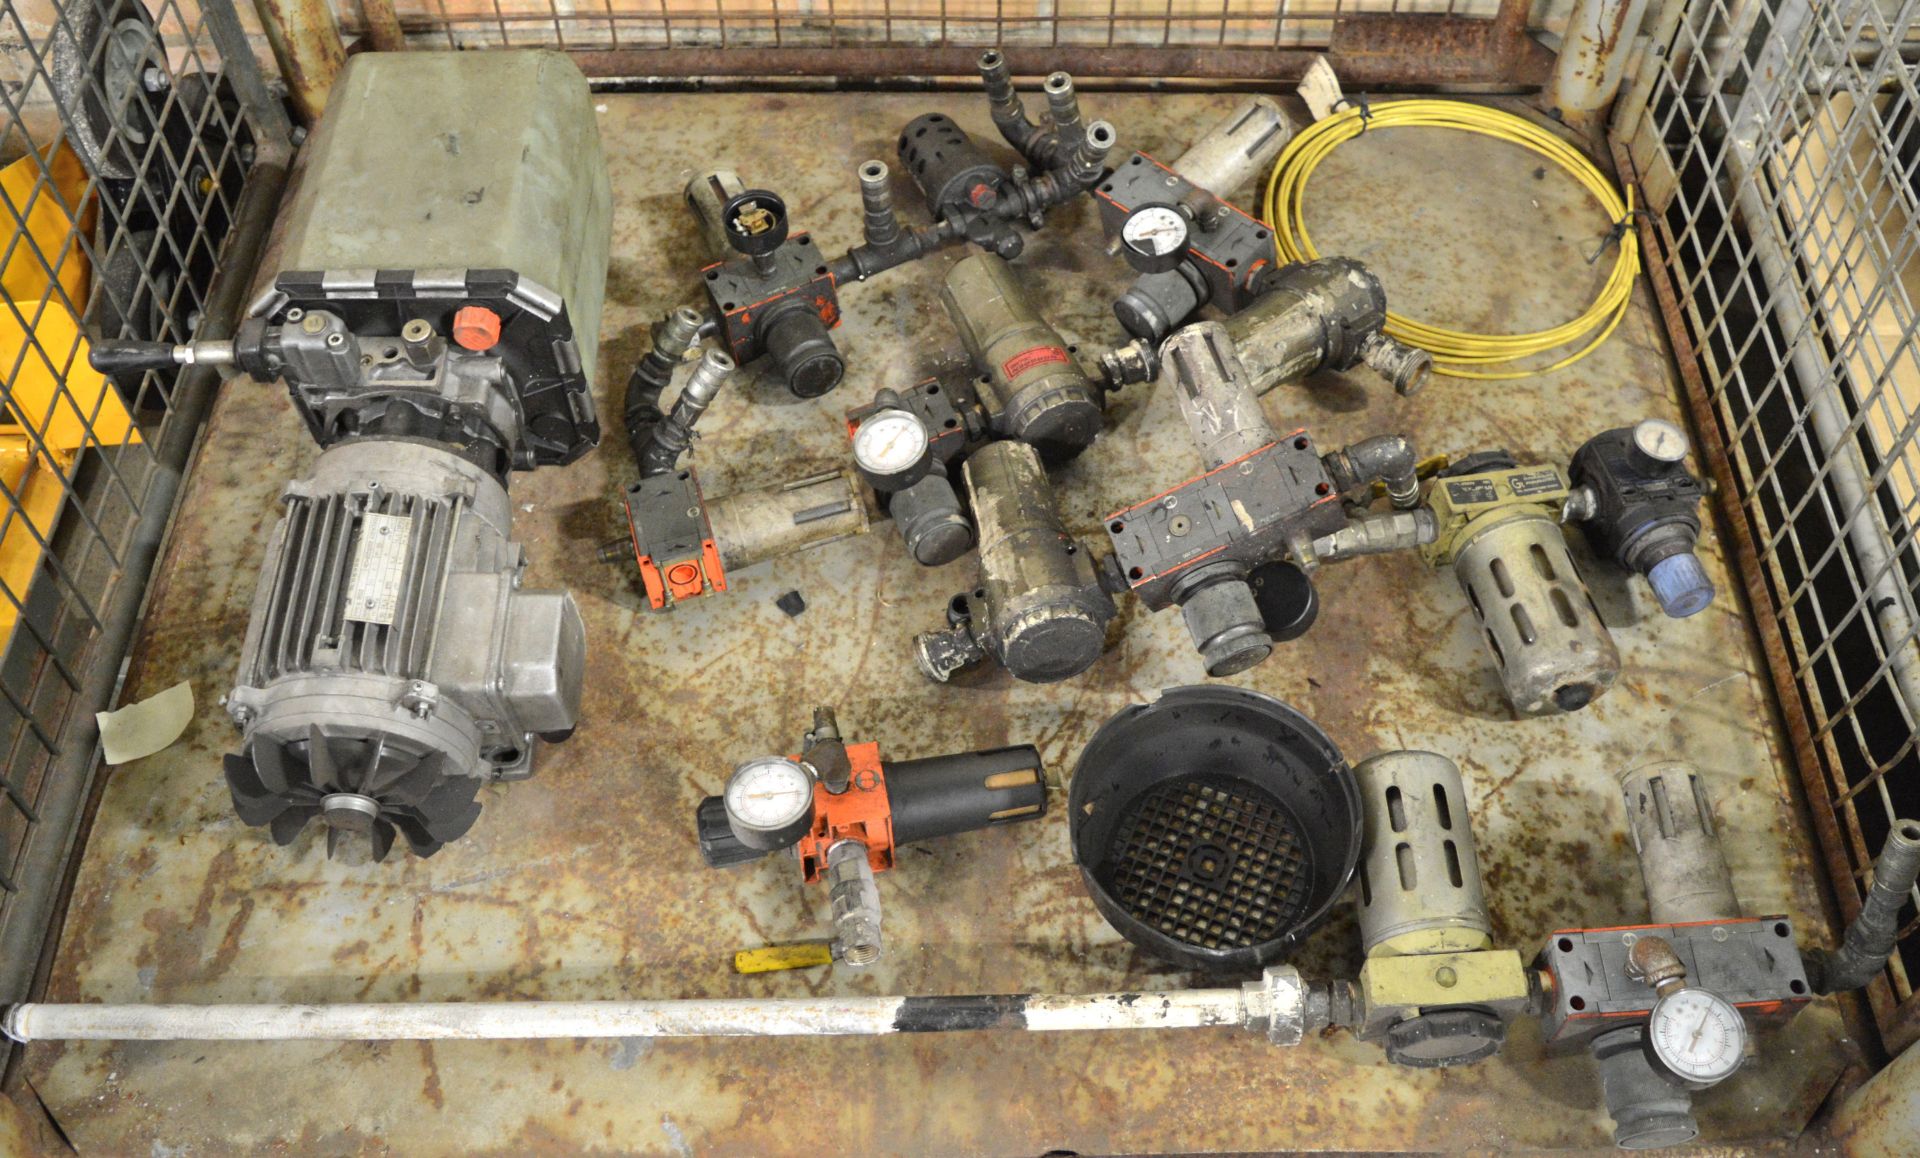 Hydraulic Pump, Airline Pressure Filters & Regulators.